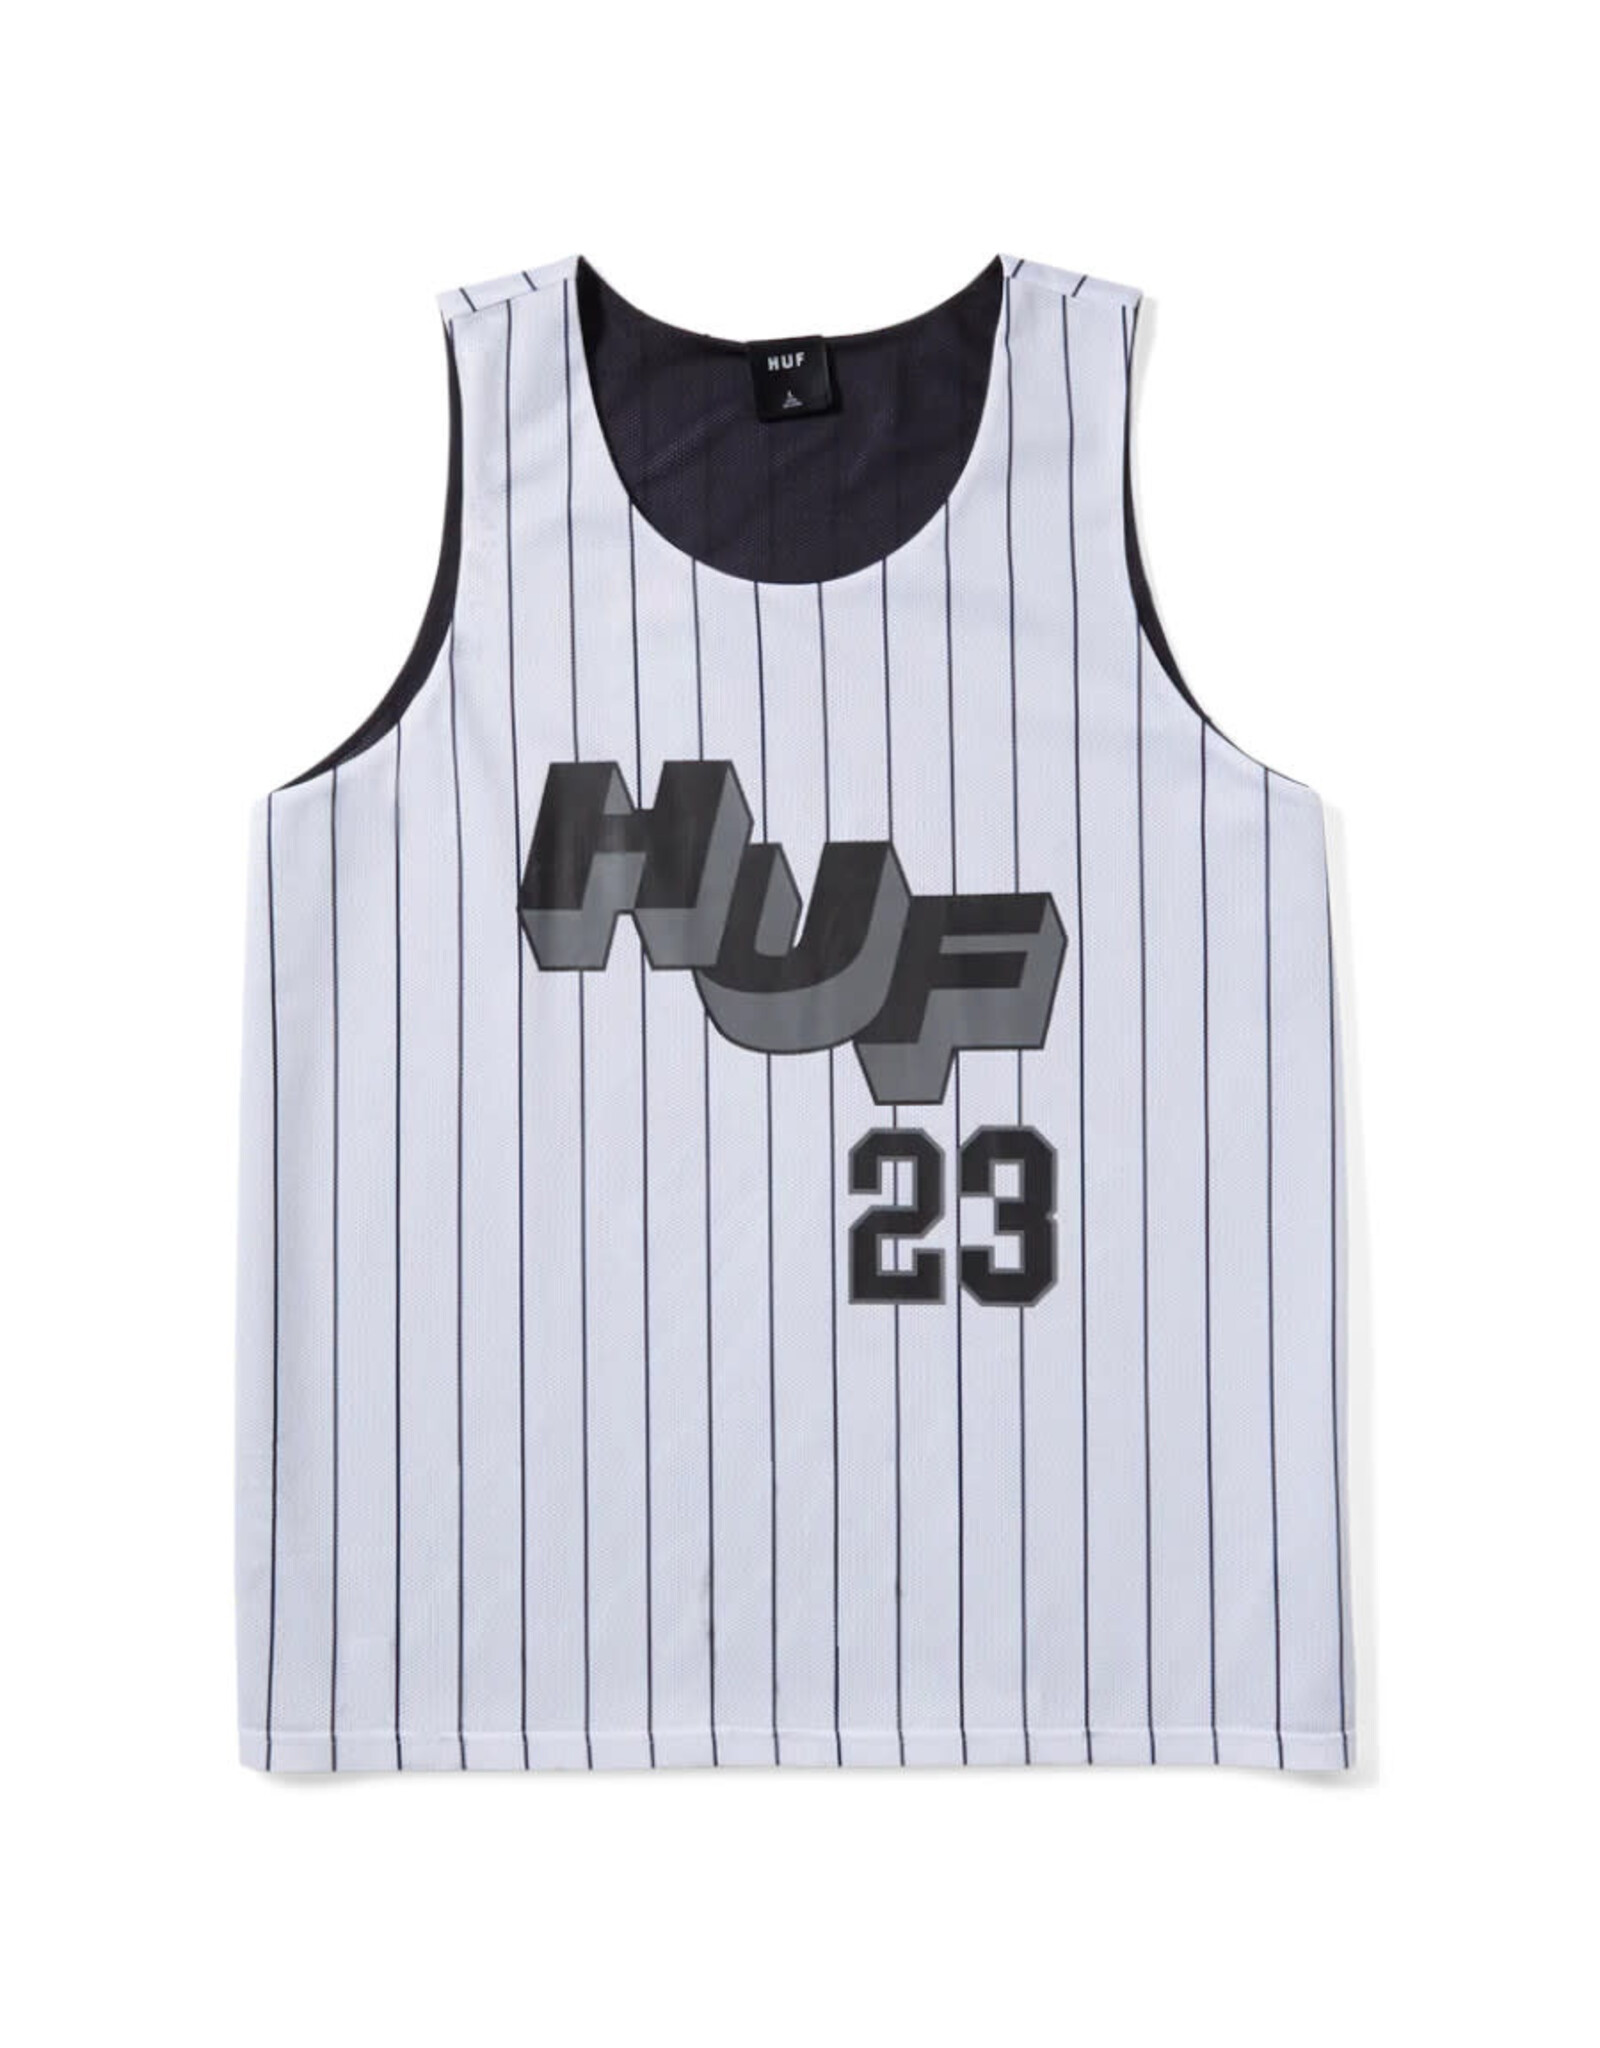 Huf Huf Jersey Half Court Reversible (Black/White)